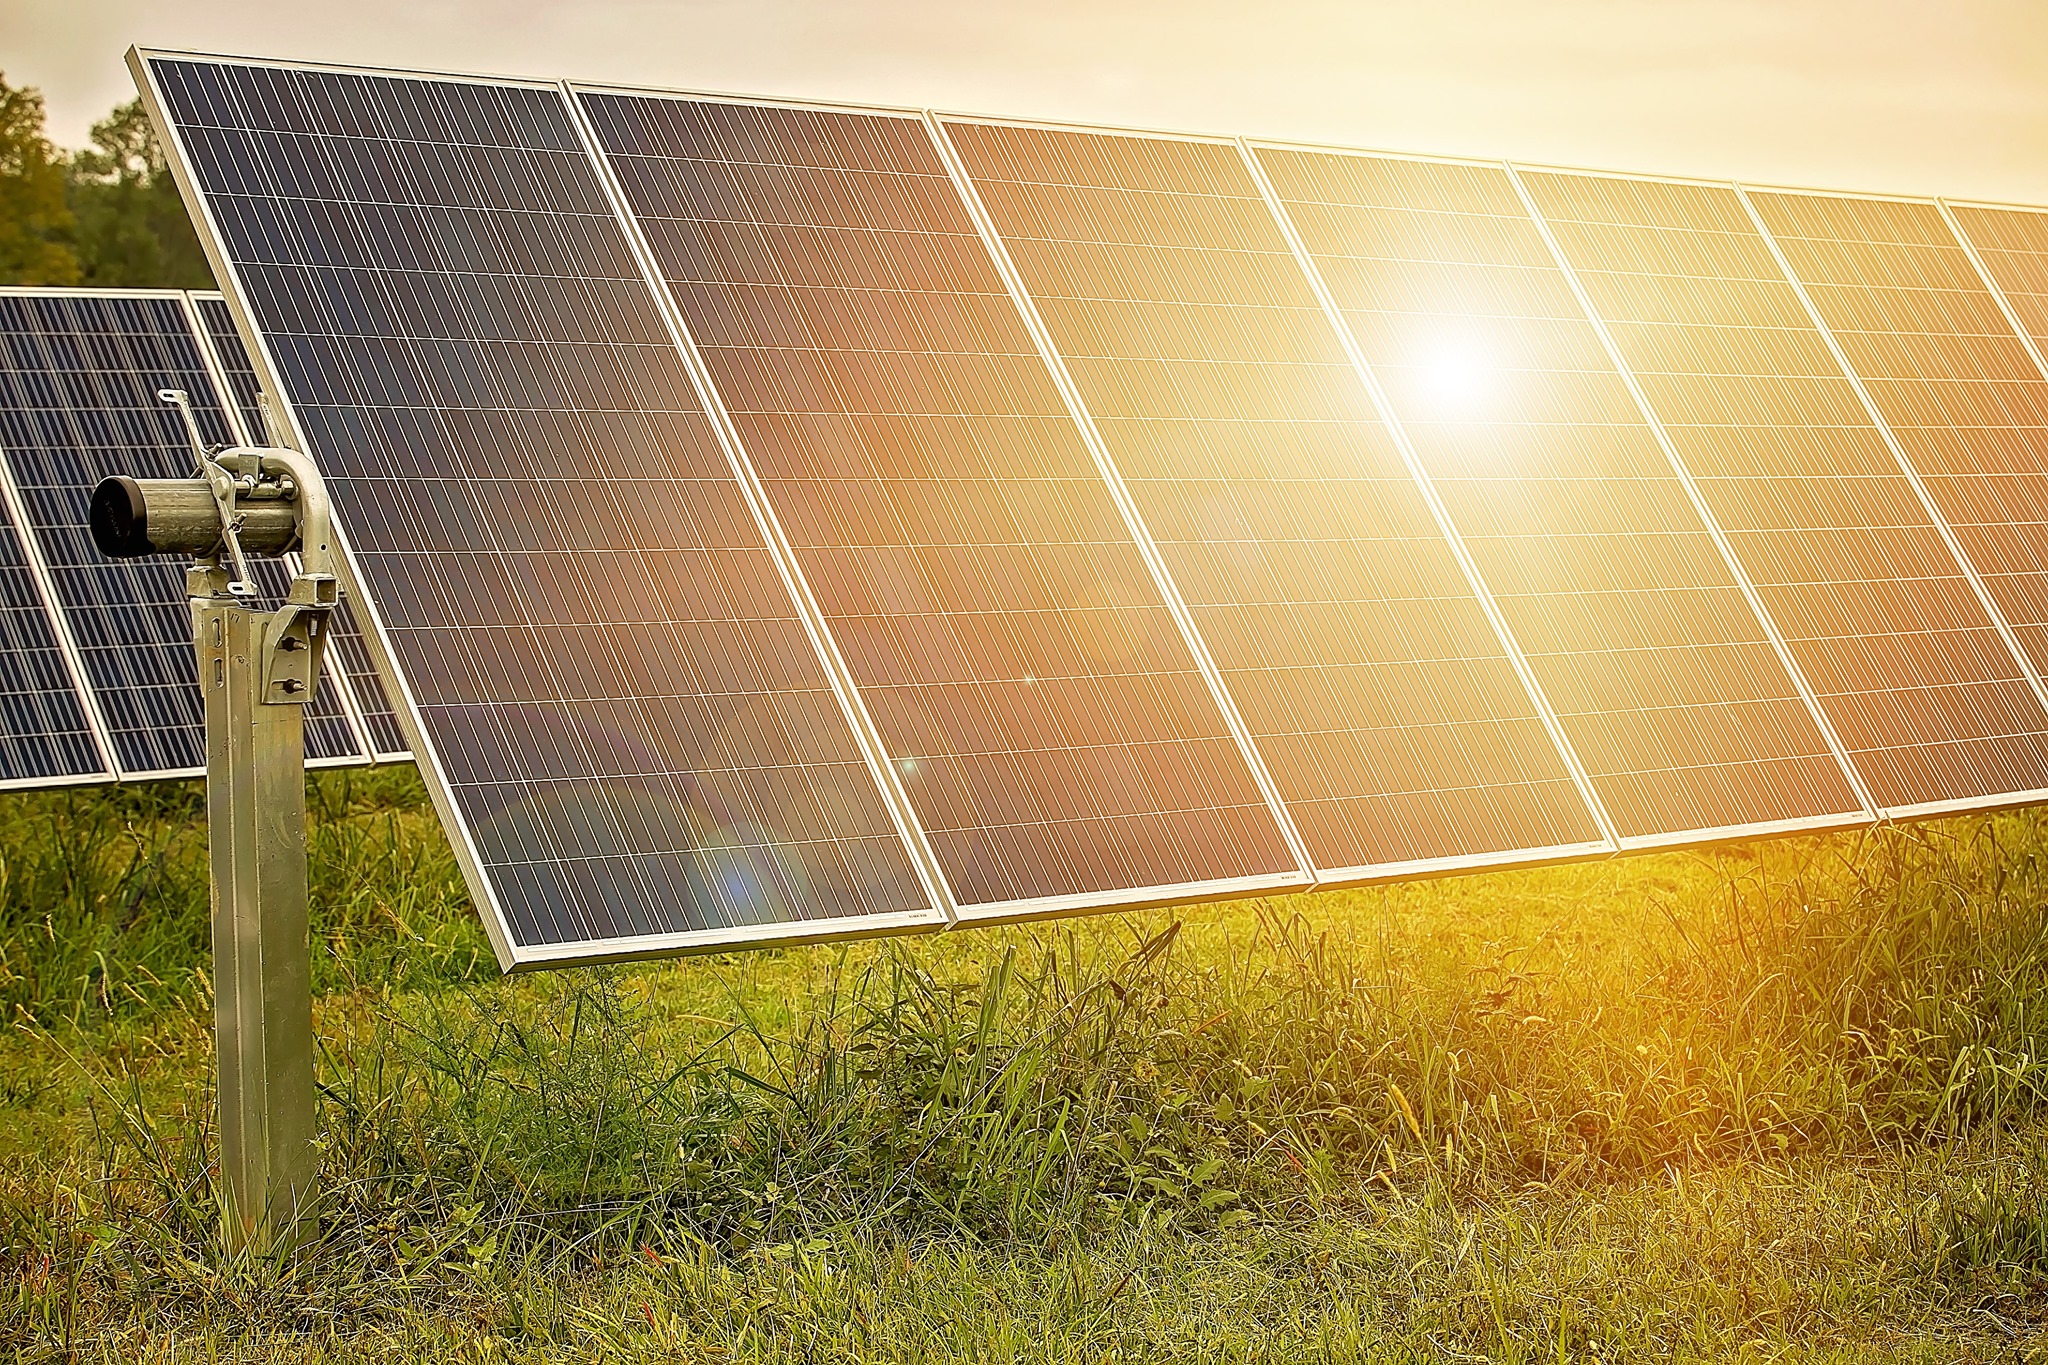 Jonesville Solar Farm Set to Start Producing Energy This Week